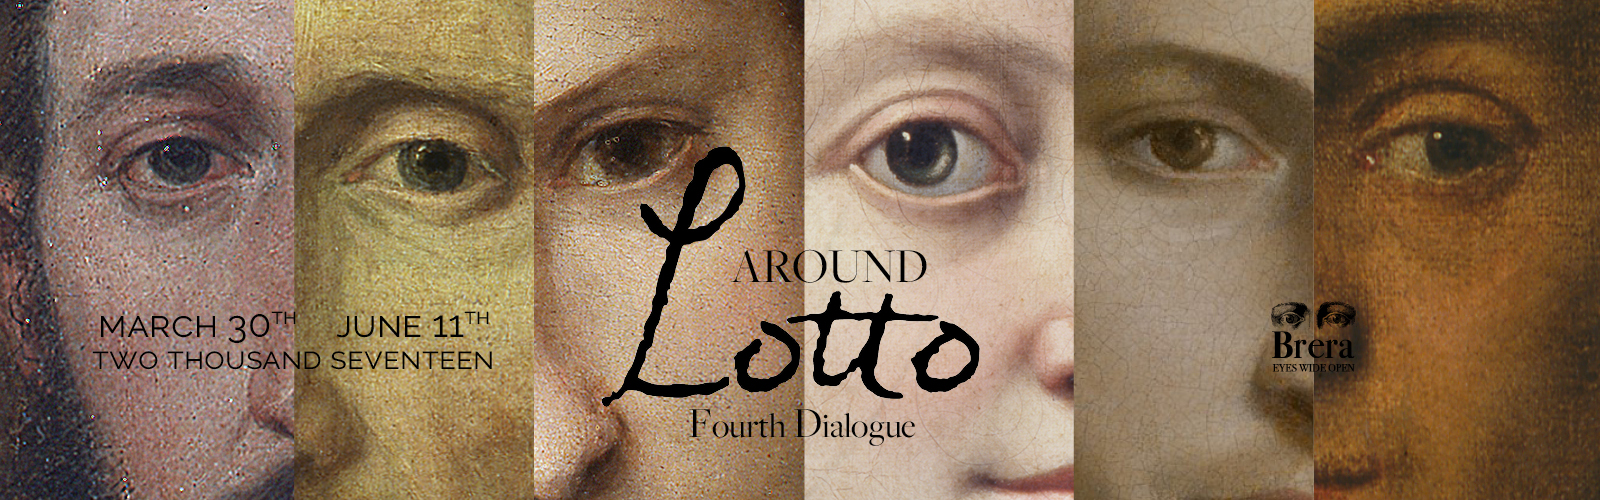 Fourth Dialogue “Around Lotto”